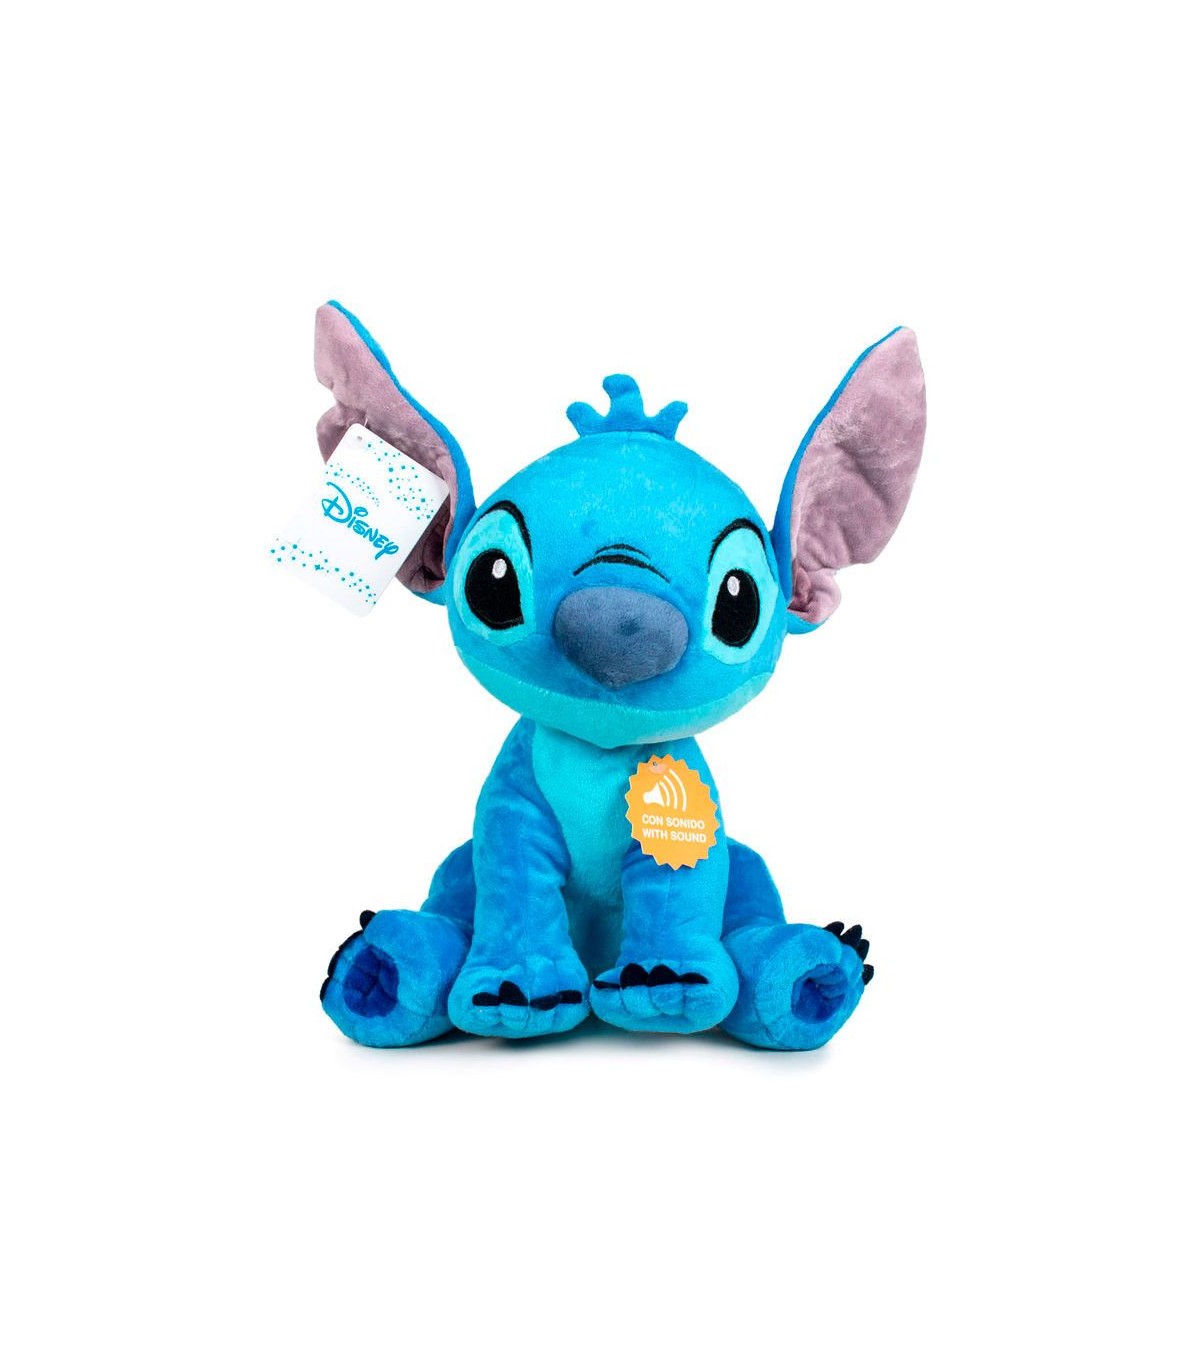 Comprar Peluche Stitch Disney ¡Venta Online! Mediano y Gigante